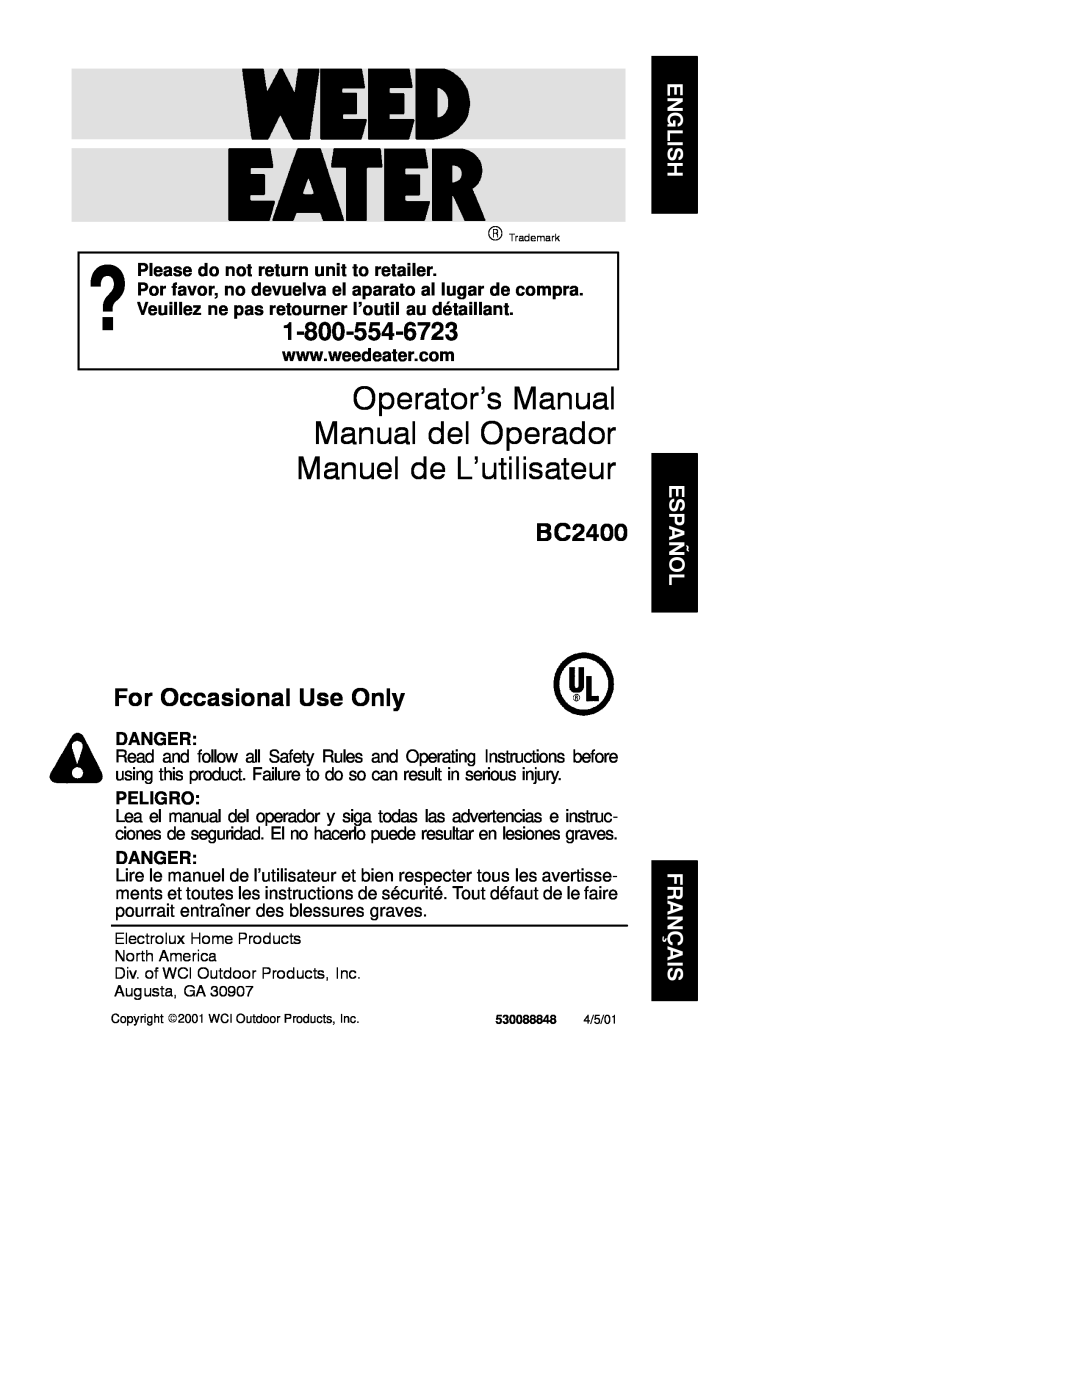 Weed Eater 530088848 operating instructions Operator’s Manual Manual del Operador, Manuel de L’utilisateur, Danger 